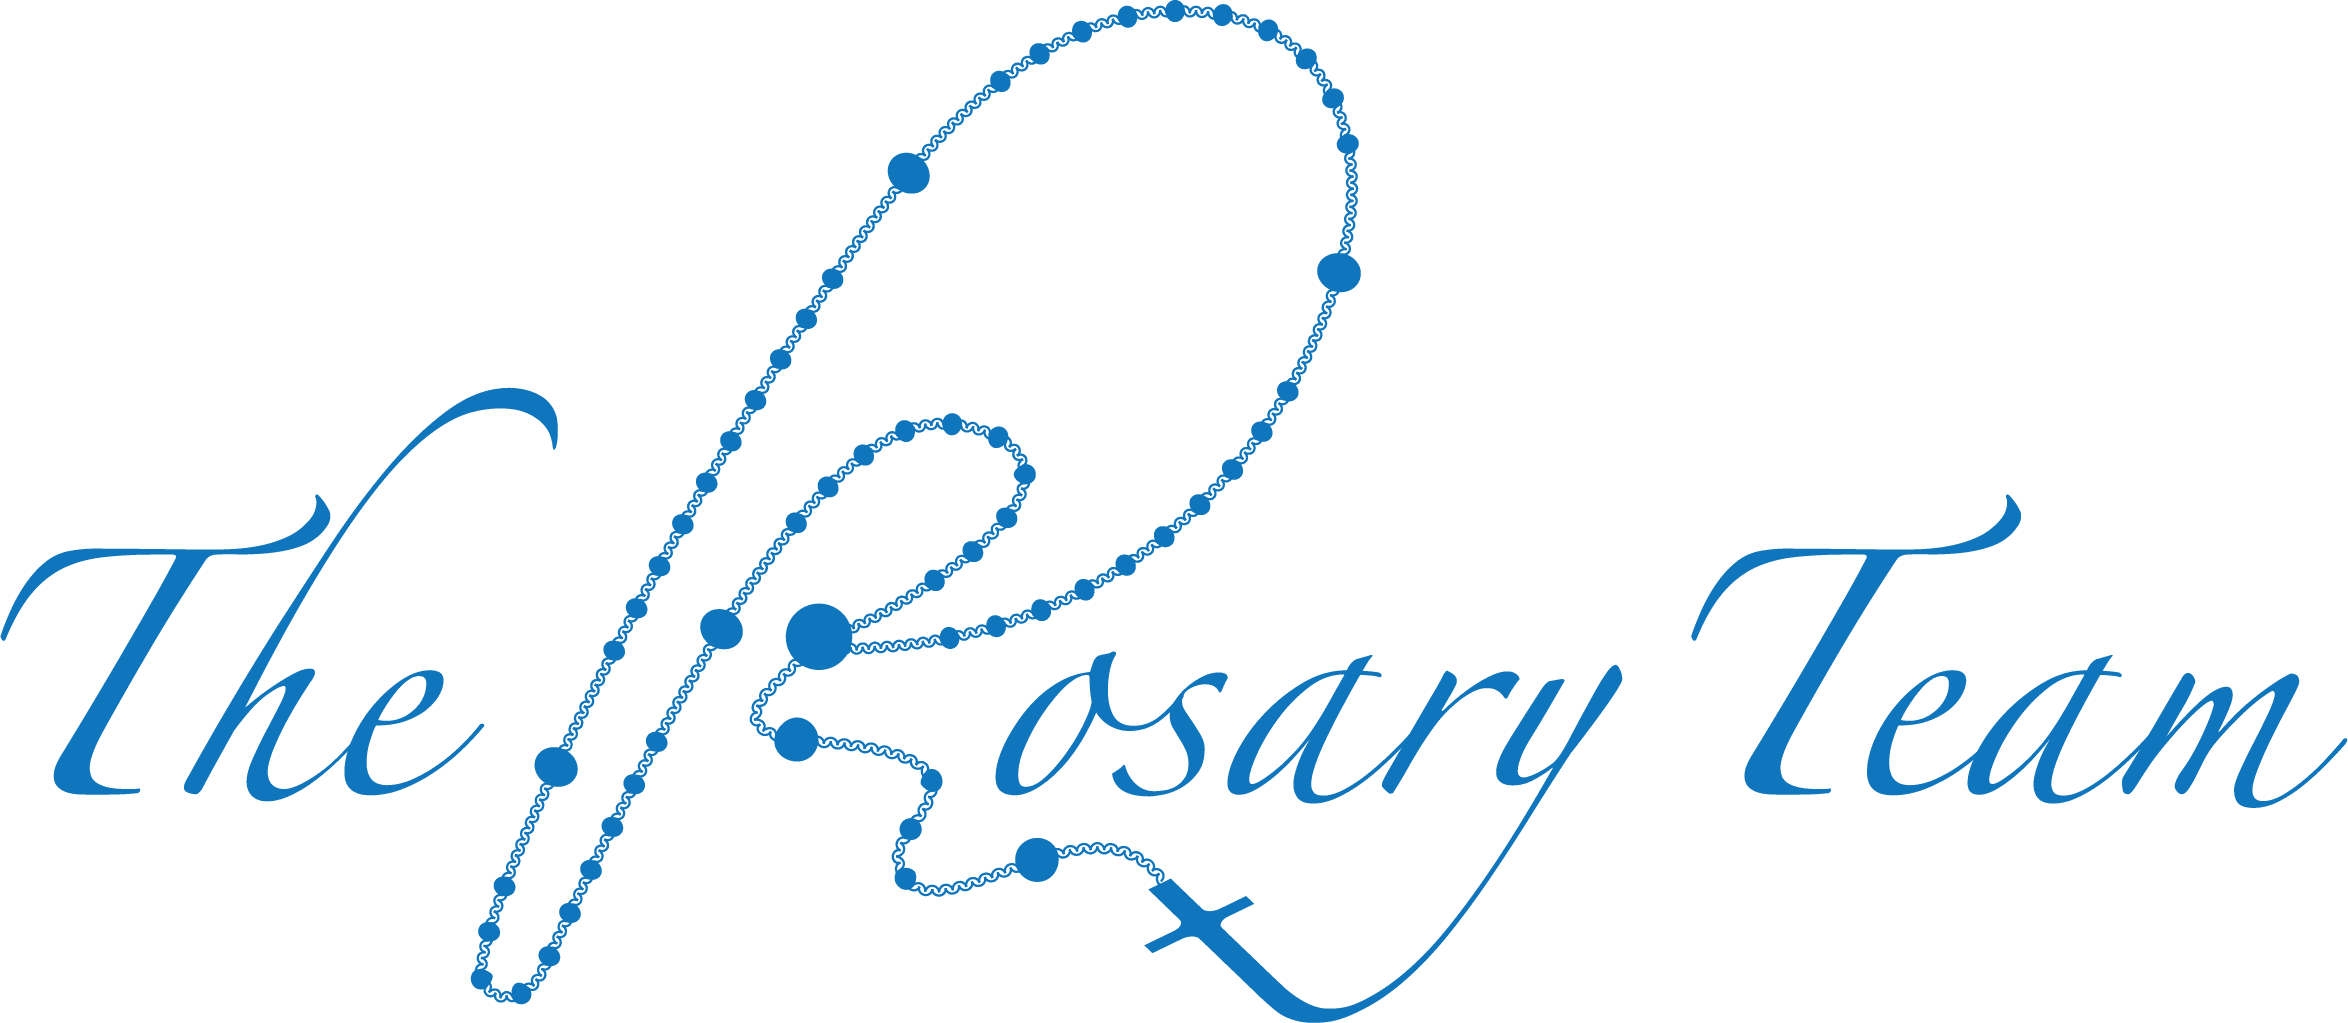 The rosary team logo.